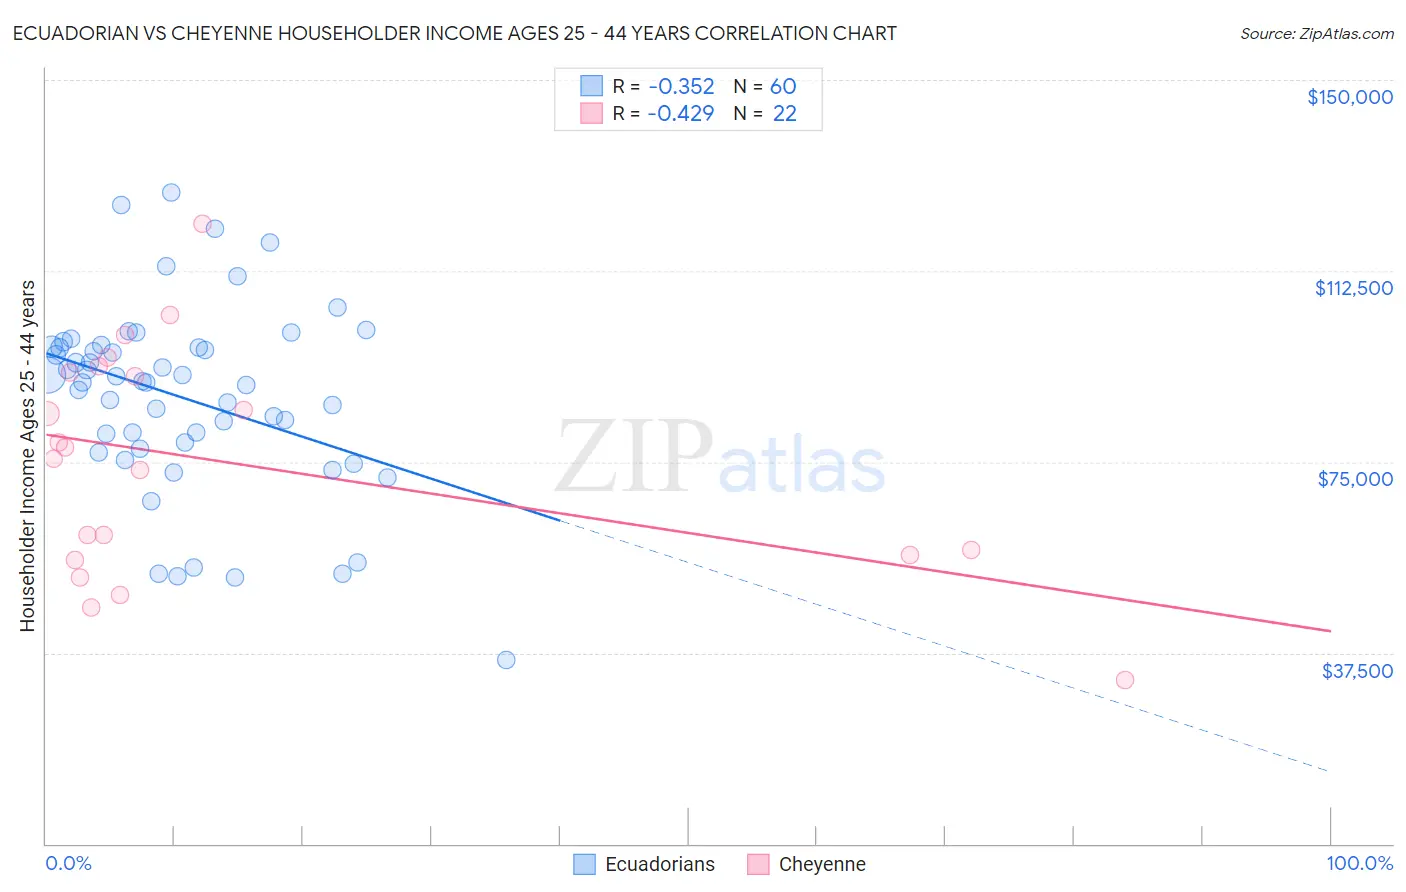 Ecuadorian vs Cheyenne Householder Income Ages 25 - 44 years